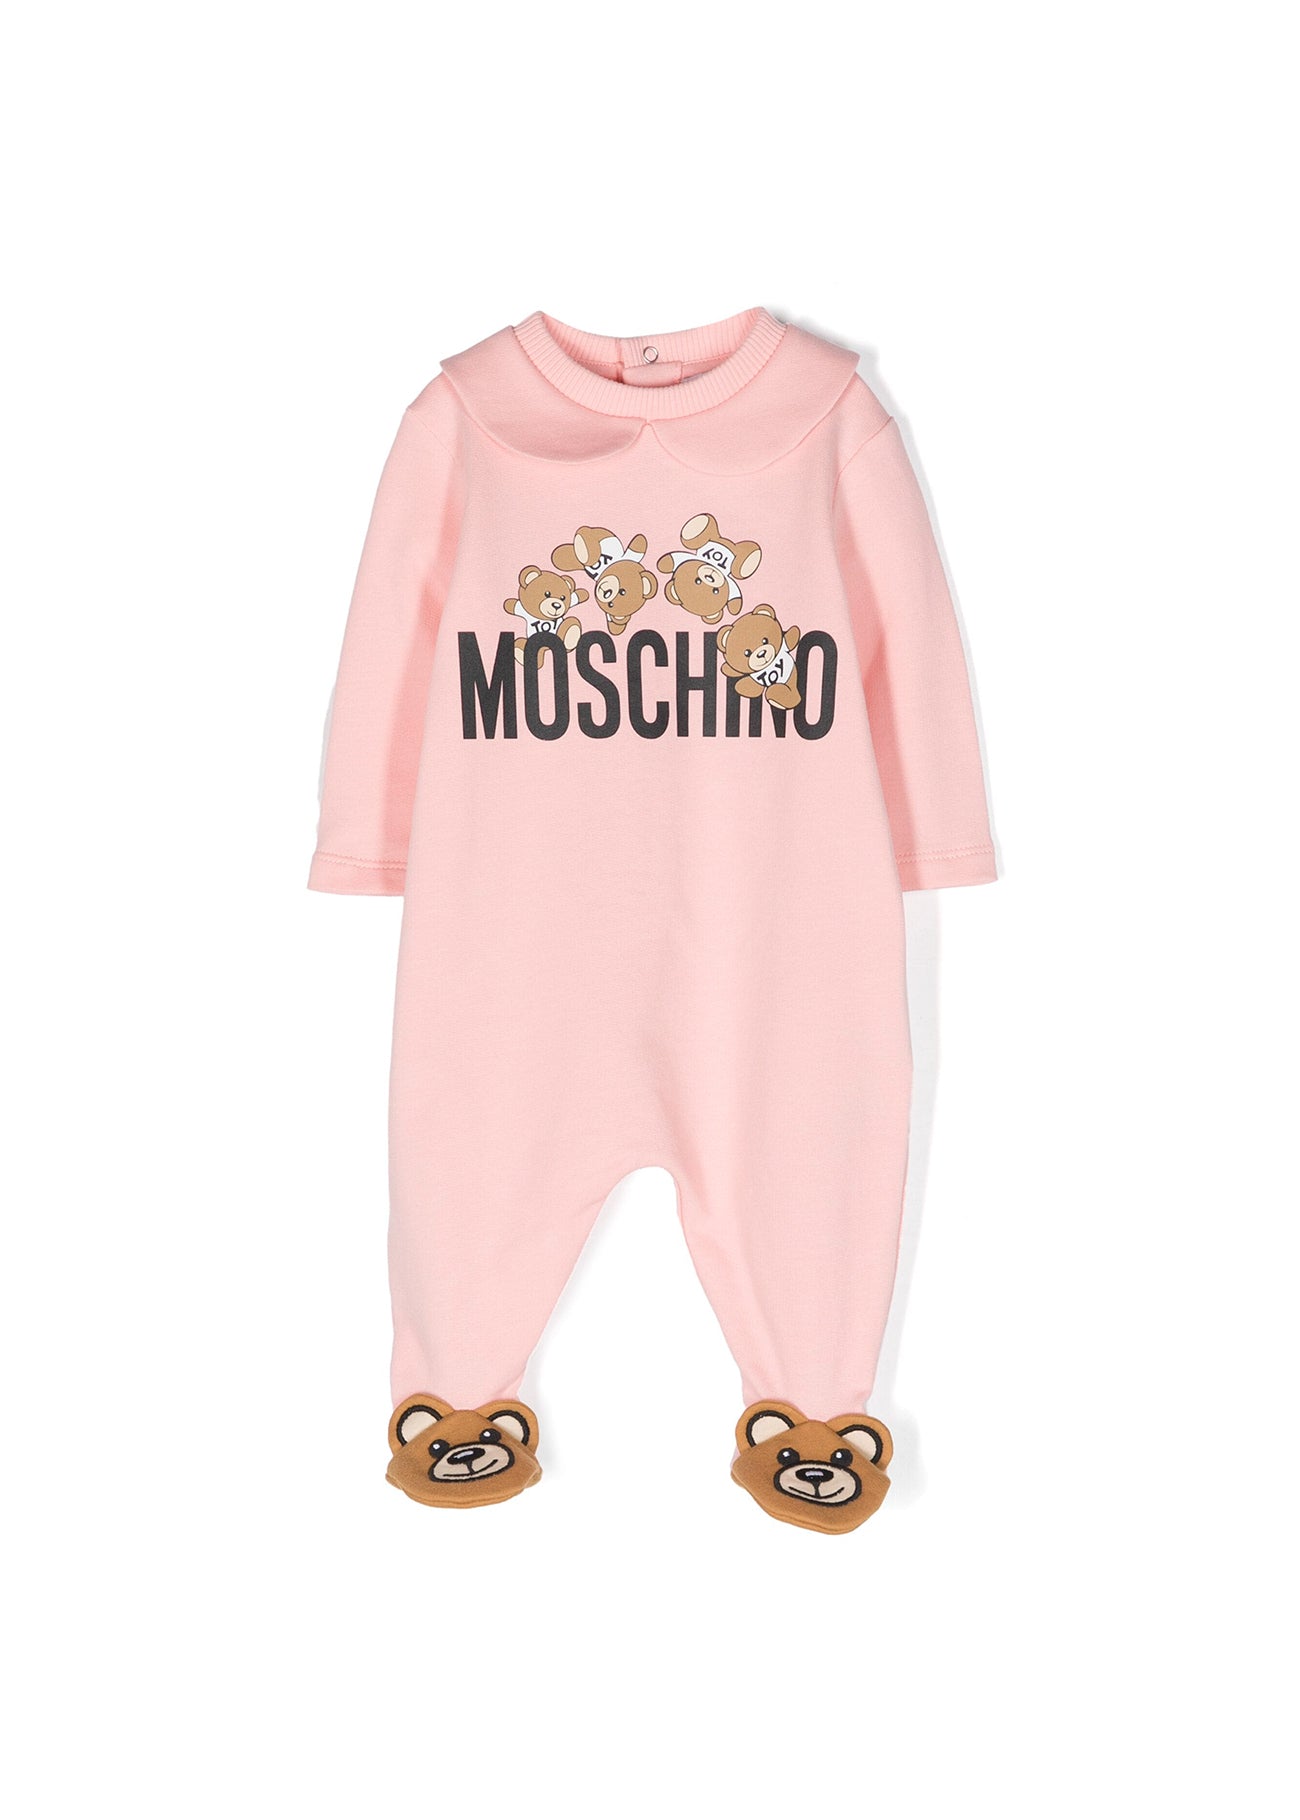 Moschino Kids Tutina Rosa con Motivo Teddy Bear